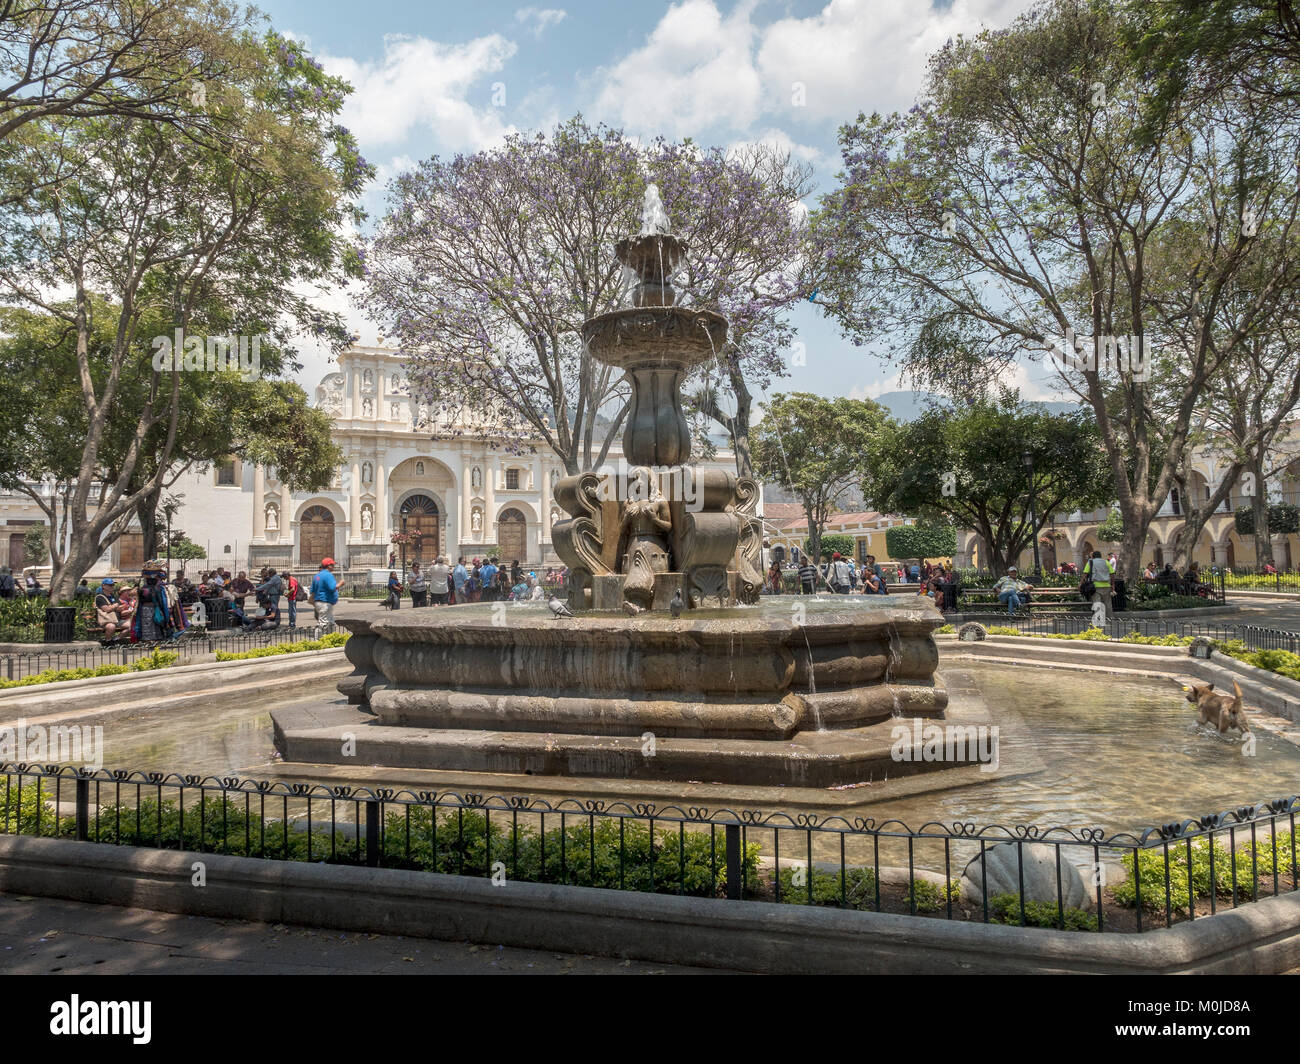 The Mermaid Fountain In Central Park (Plaza Mayor), Built By Diego de Porres in 1739 In La Antigua Guatemala, Guatemala Stock Photo